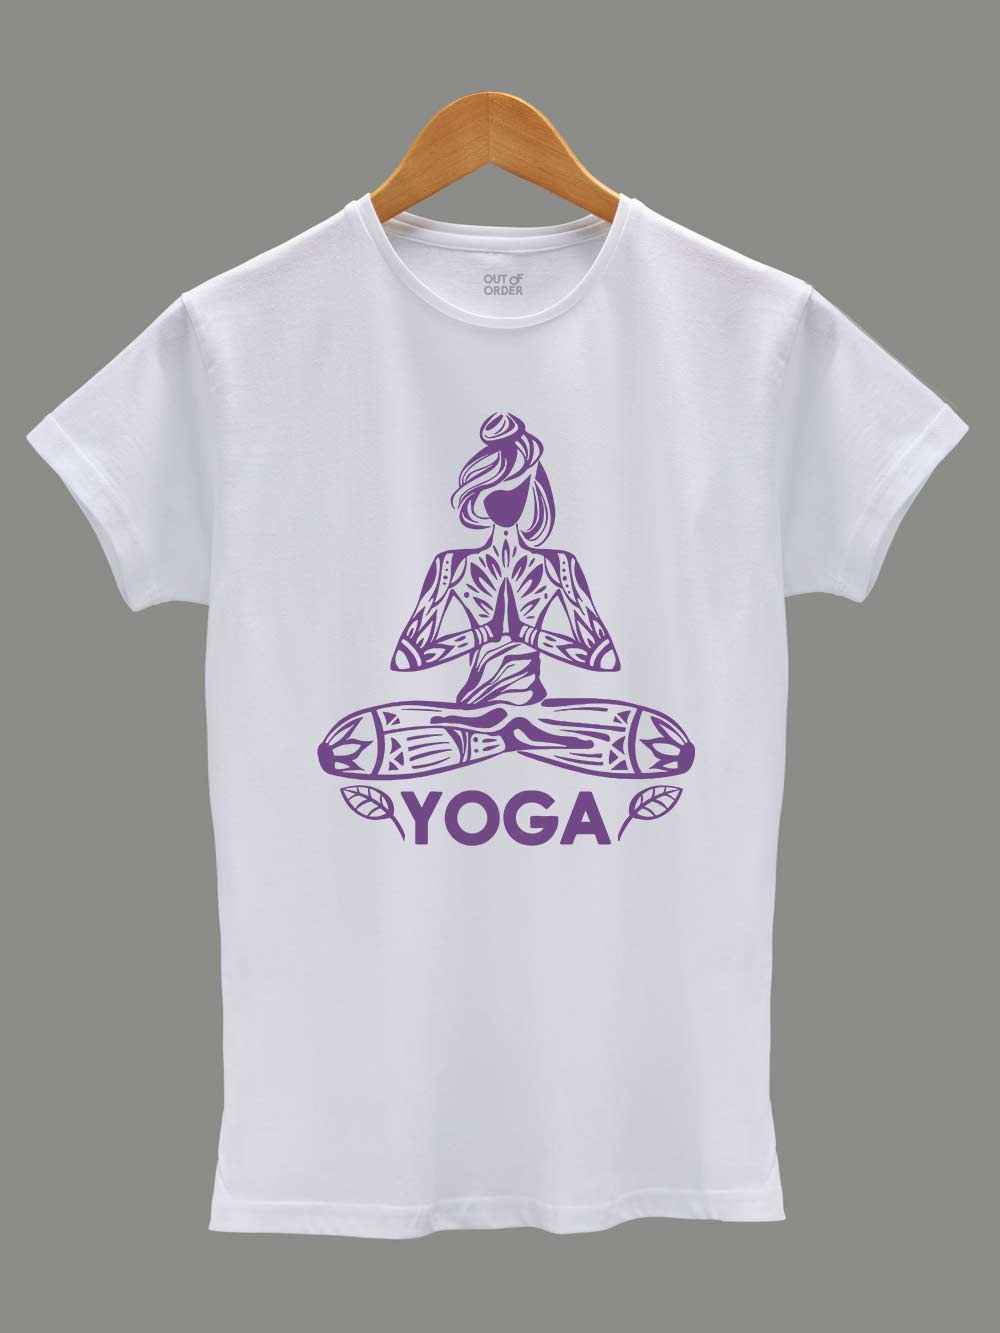 yoga t shirts online india